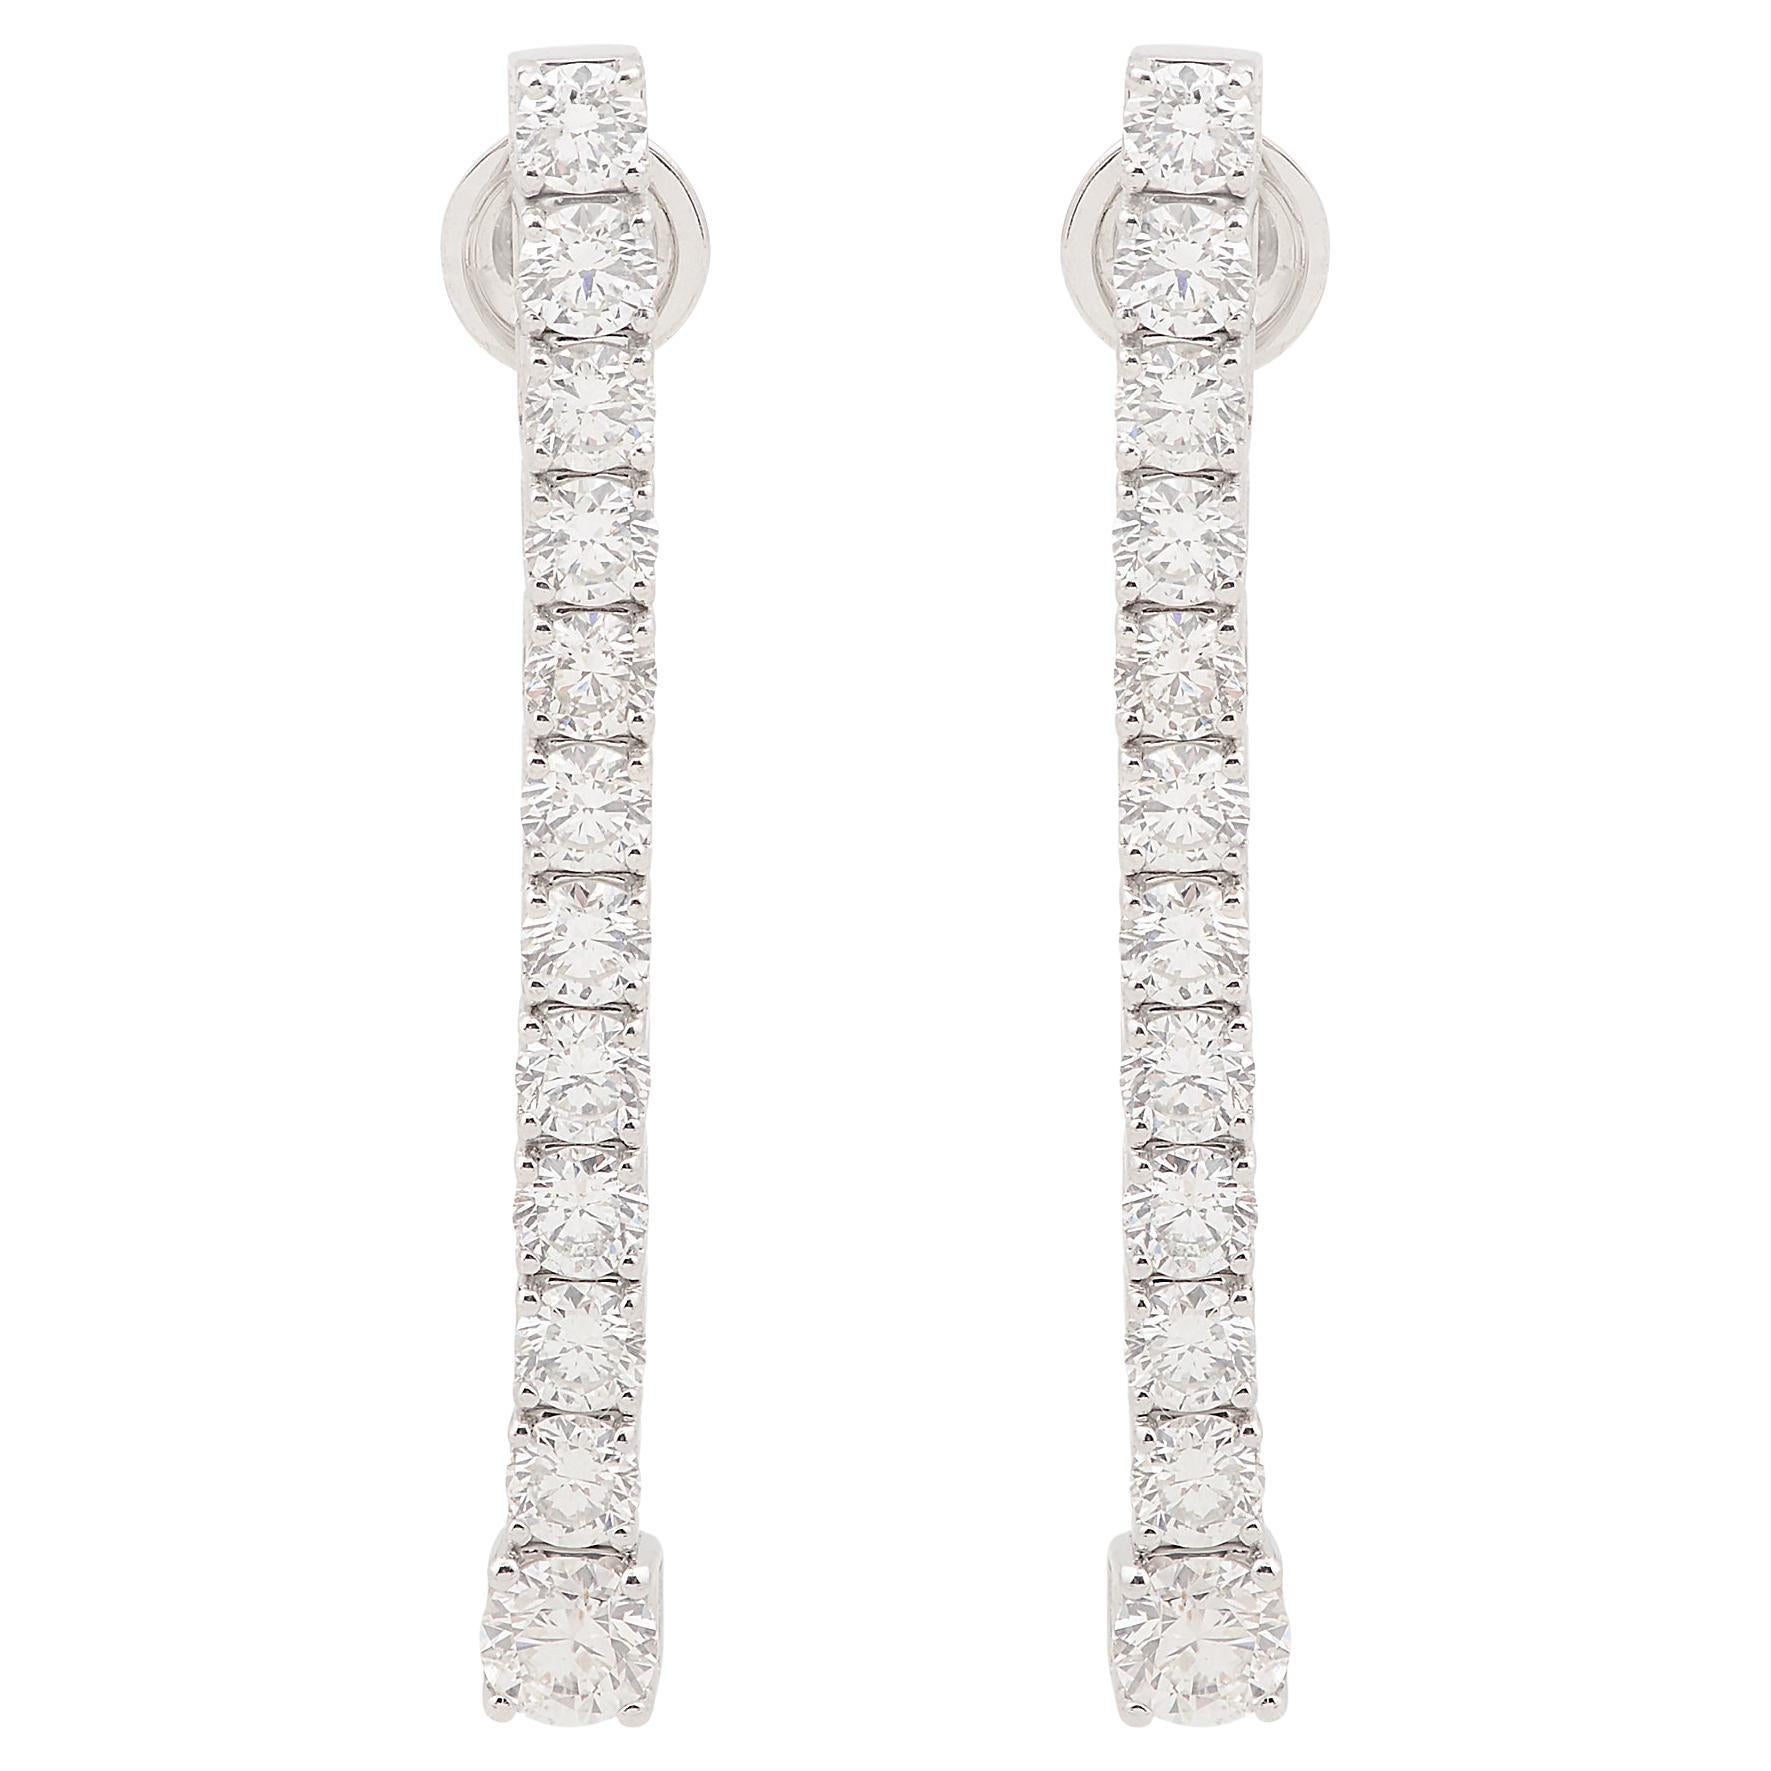 3.30 Carat Diamond Bar Dangle Earrings Solid 18k White Gold Handmade Jewelry New en vente